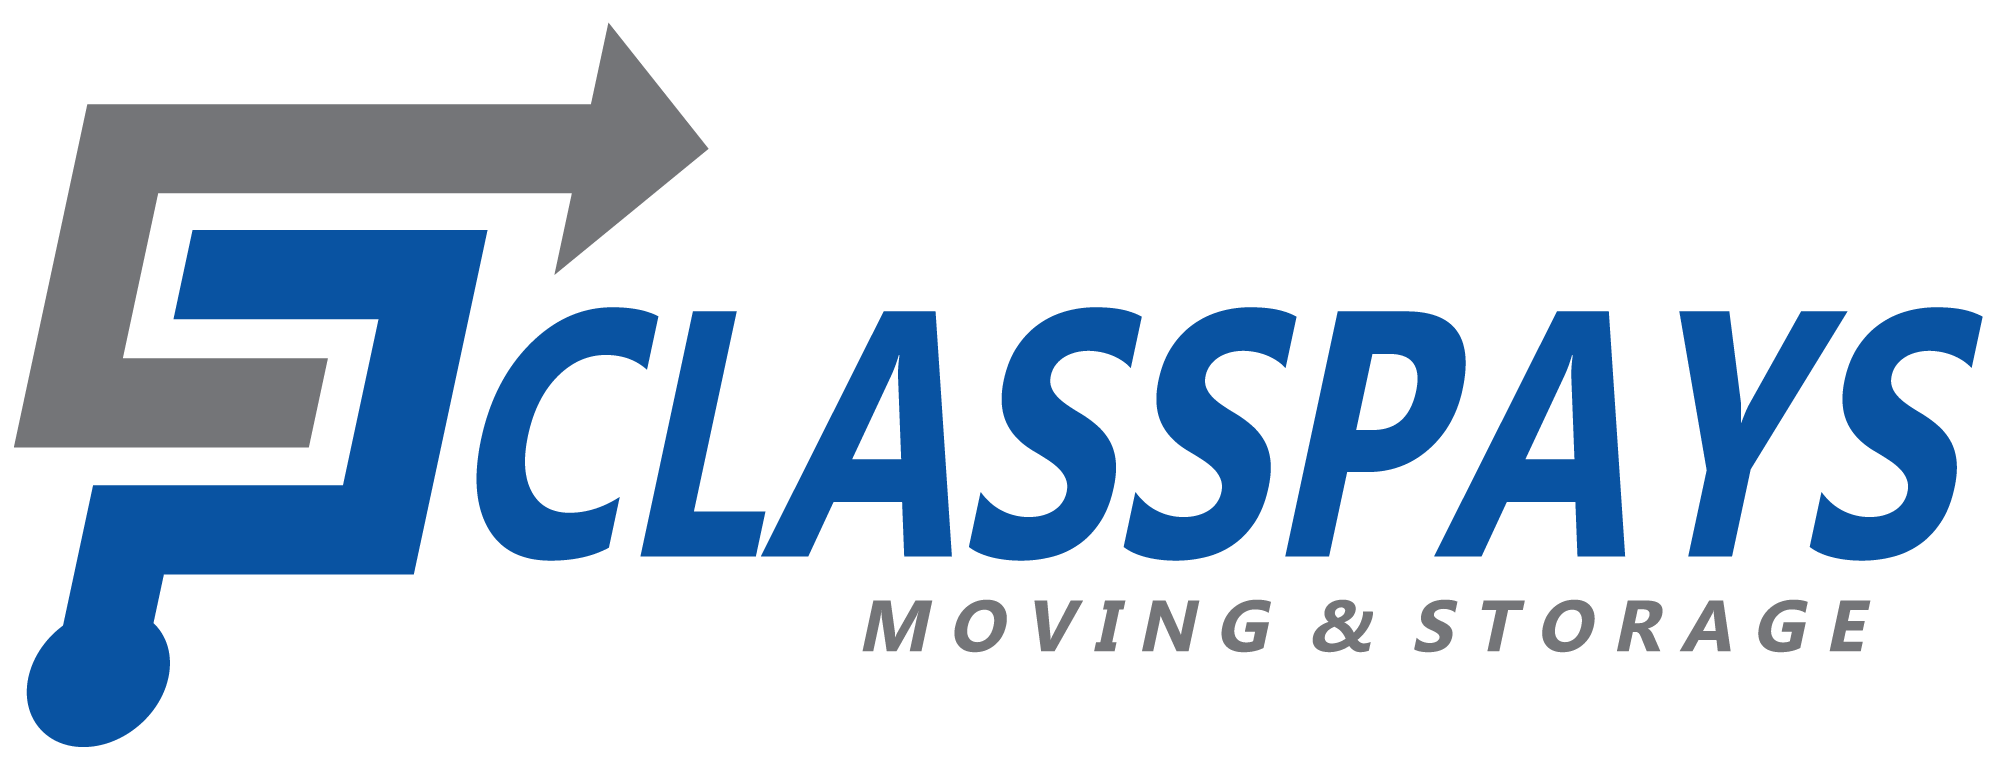 class-pays-logo-main